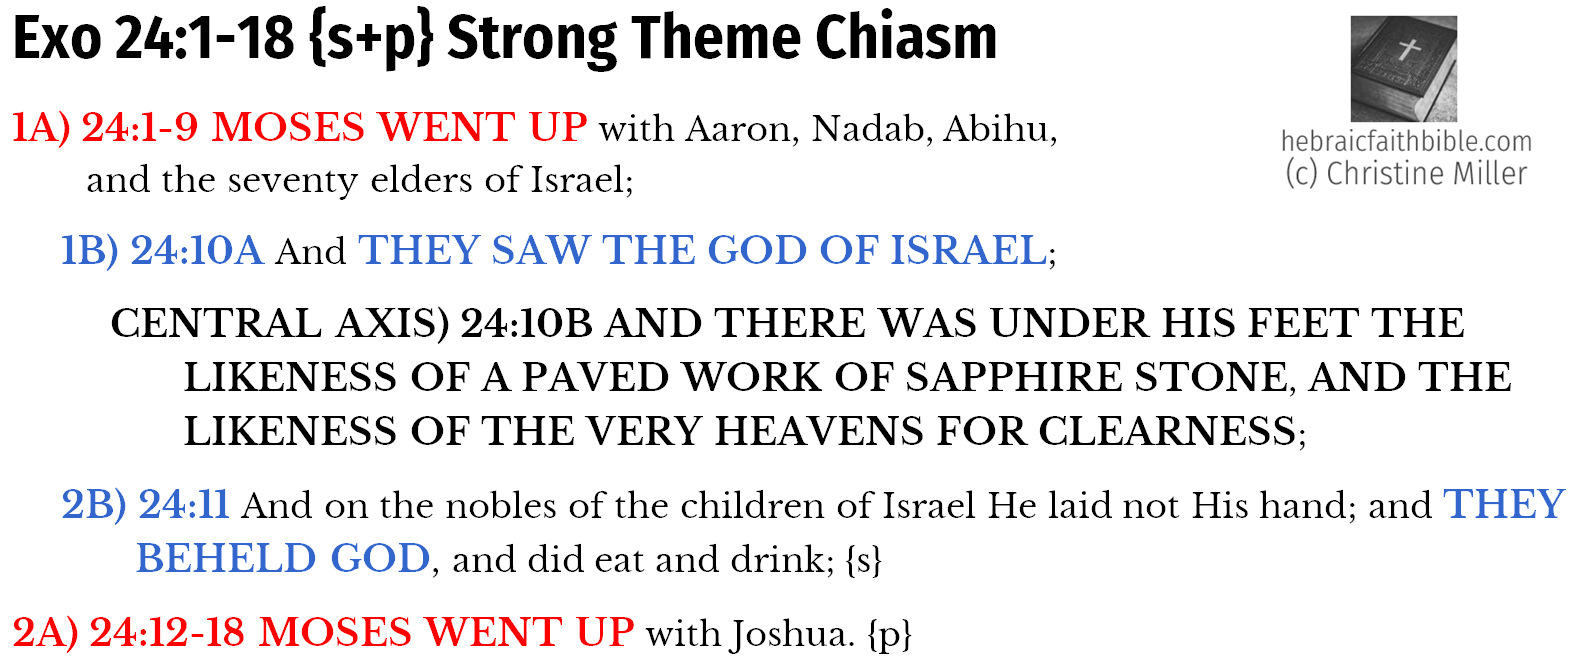 Exo 24:1-18 {s+p} Chiasm | hebraicfaithbible.com